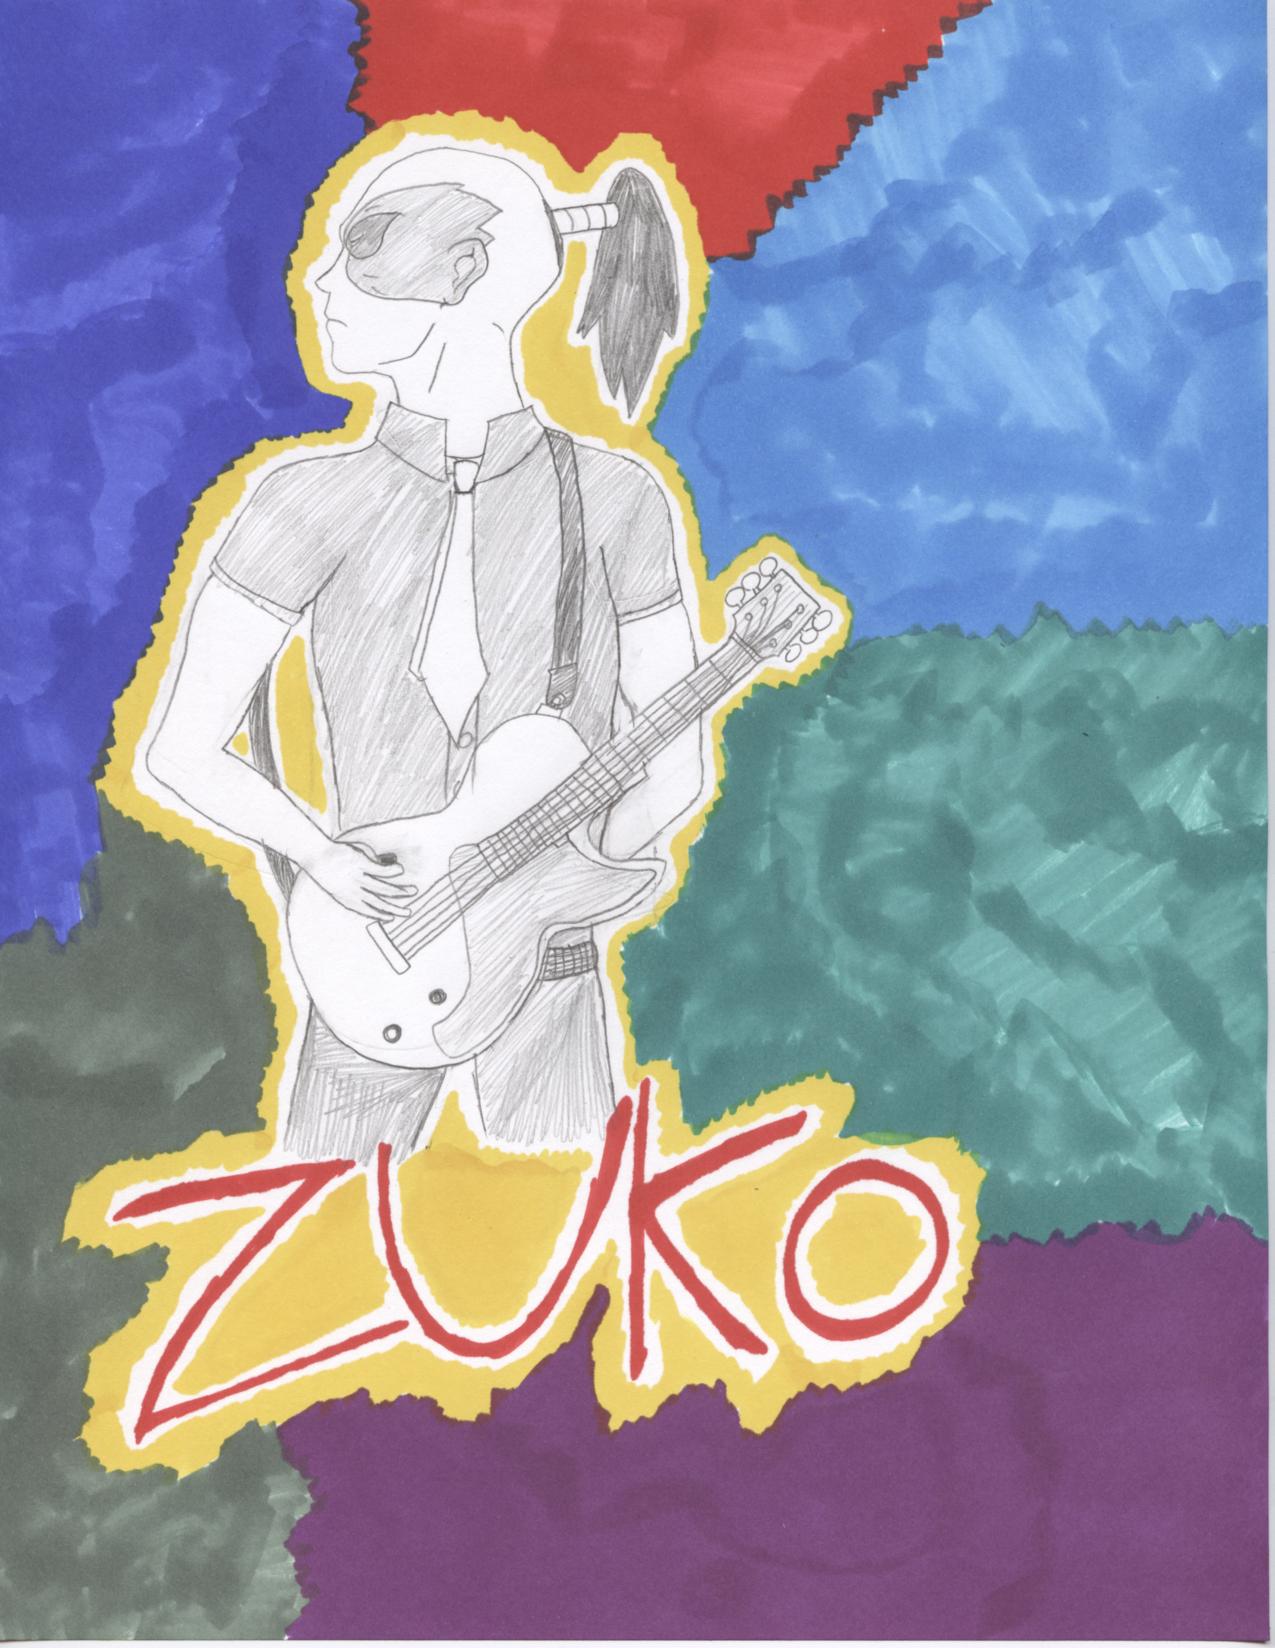 Zuko with a Guitar by standish50